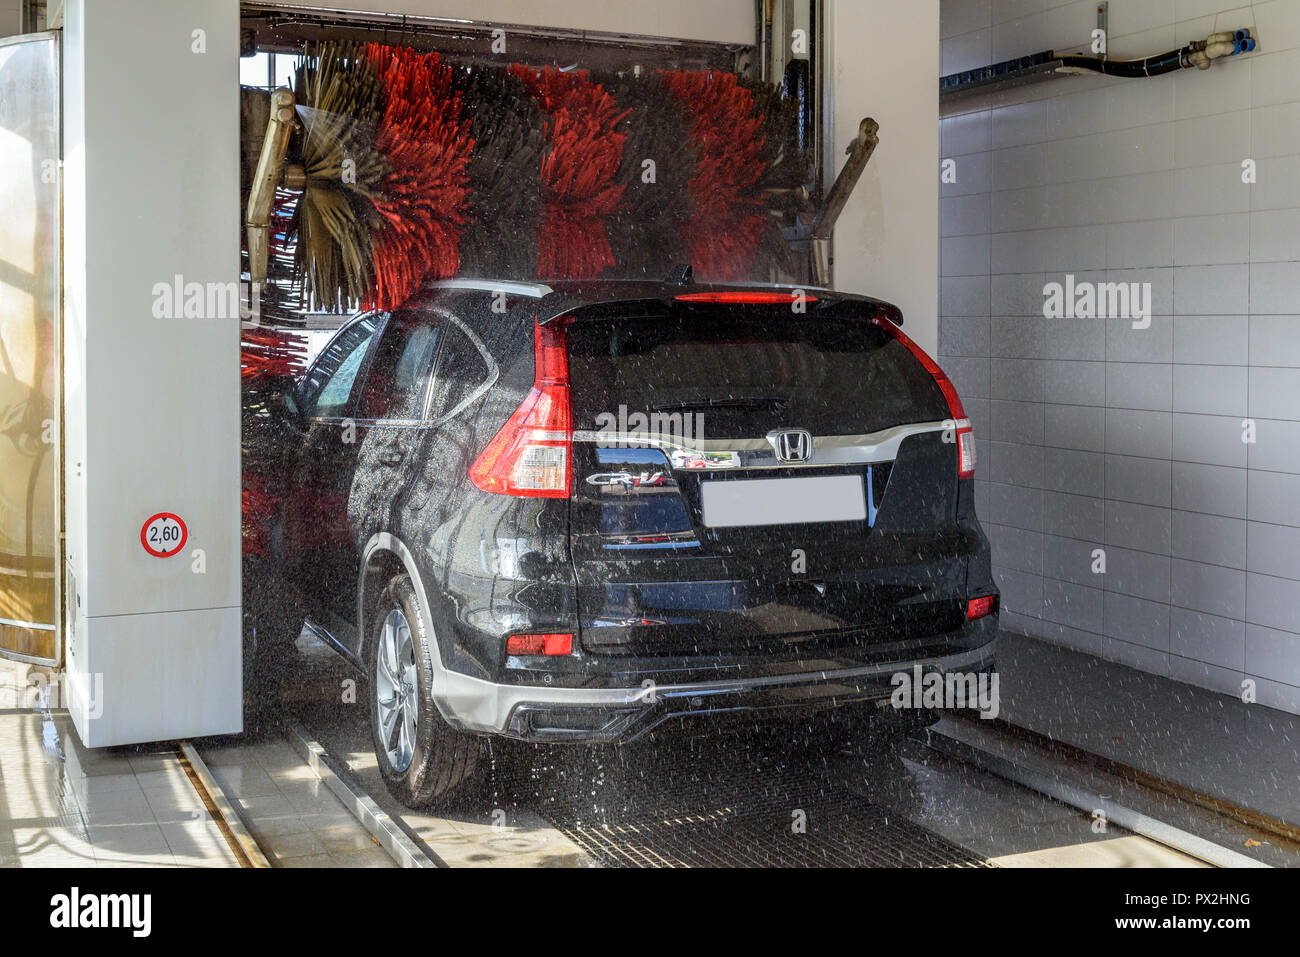 car wash ann arbor industrial